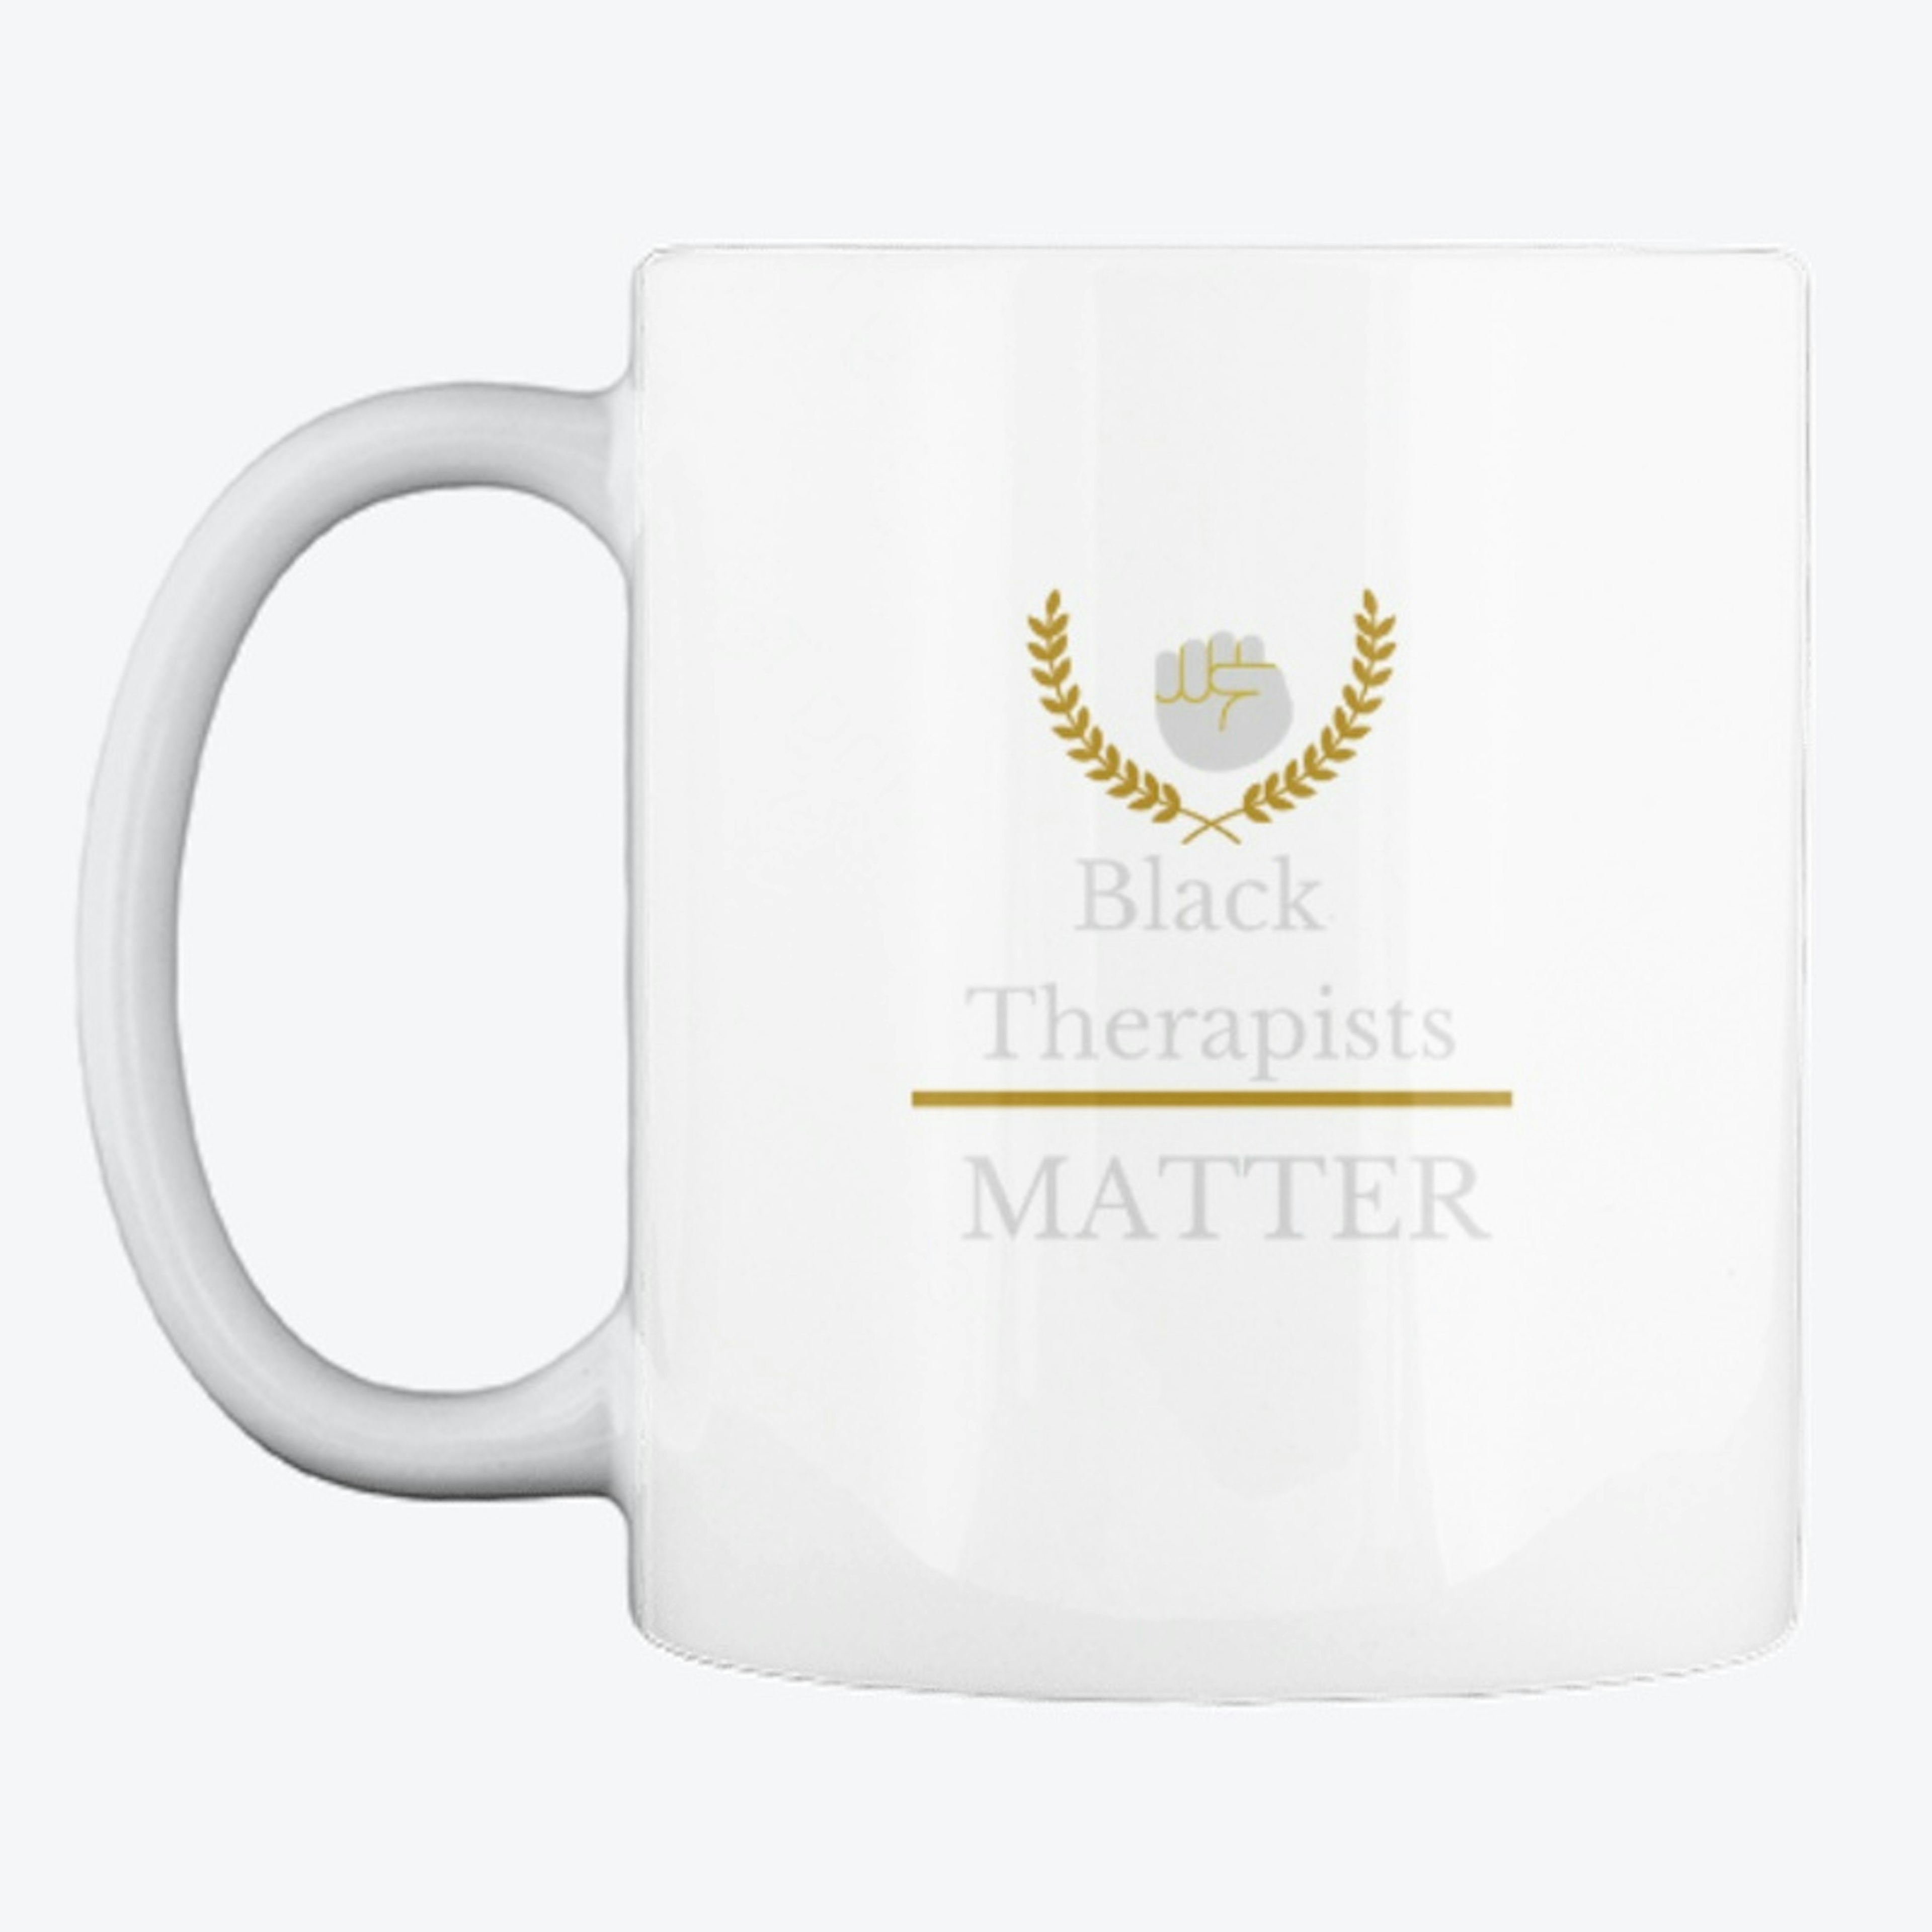 Black Therapists Matter